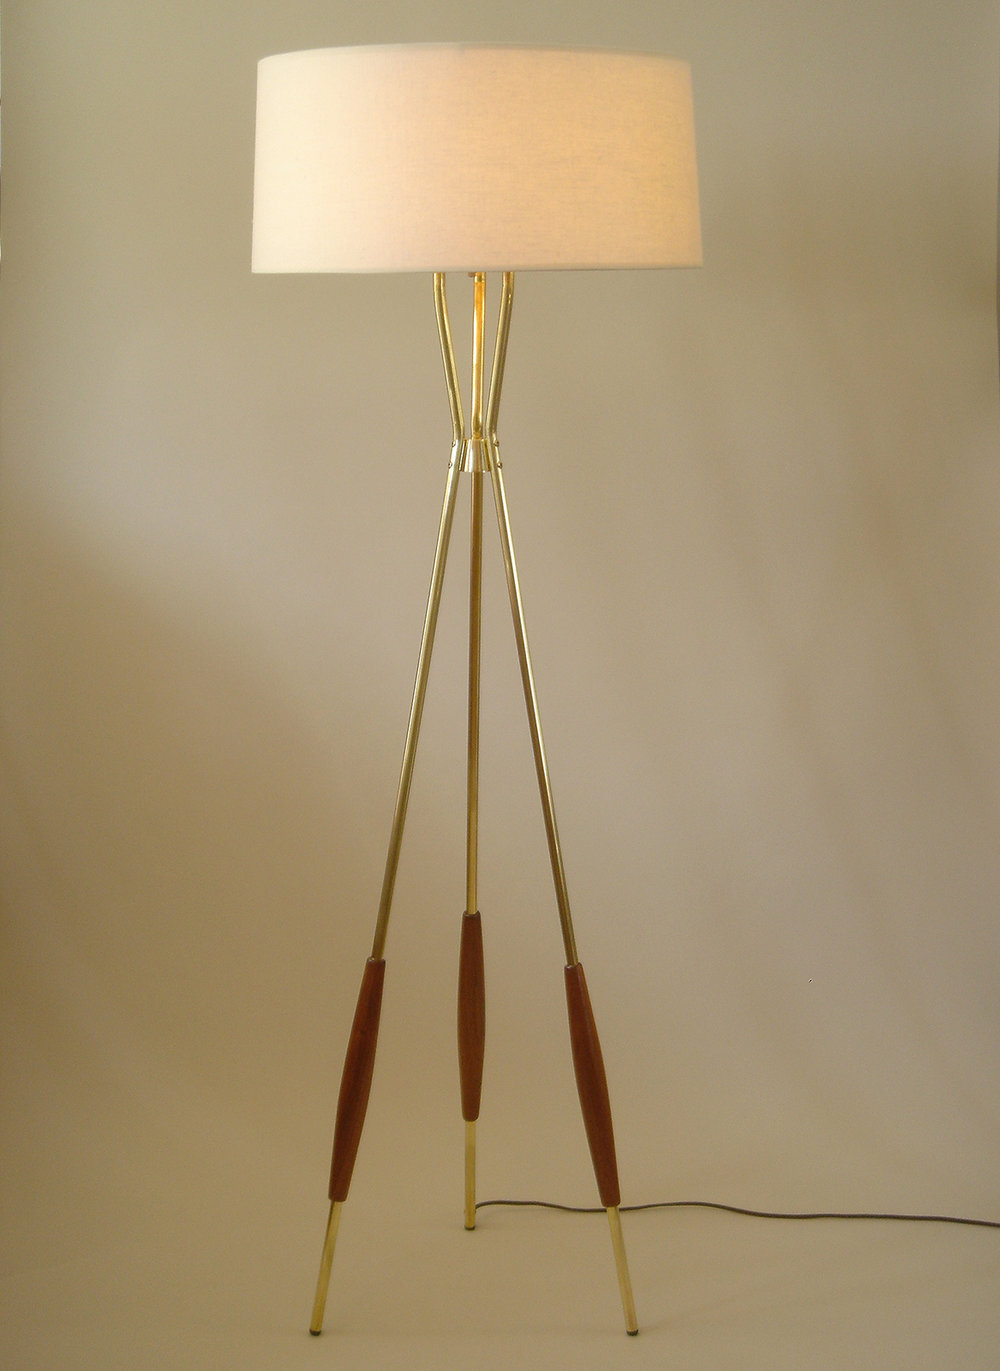 Gerald Thurston Lightolier Profile, Tripod Floor Lamp And Matching Table